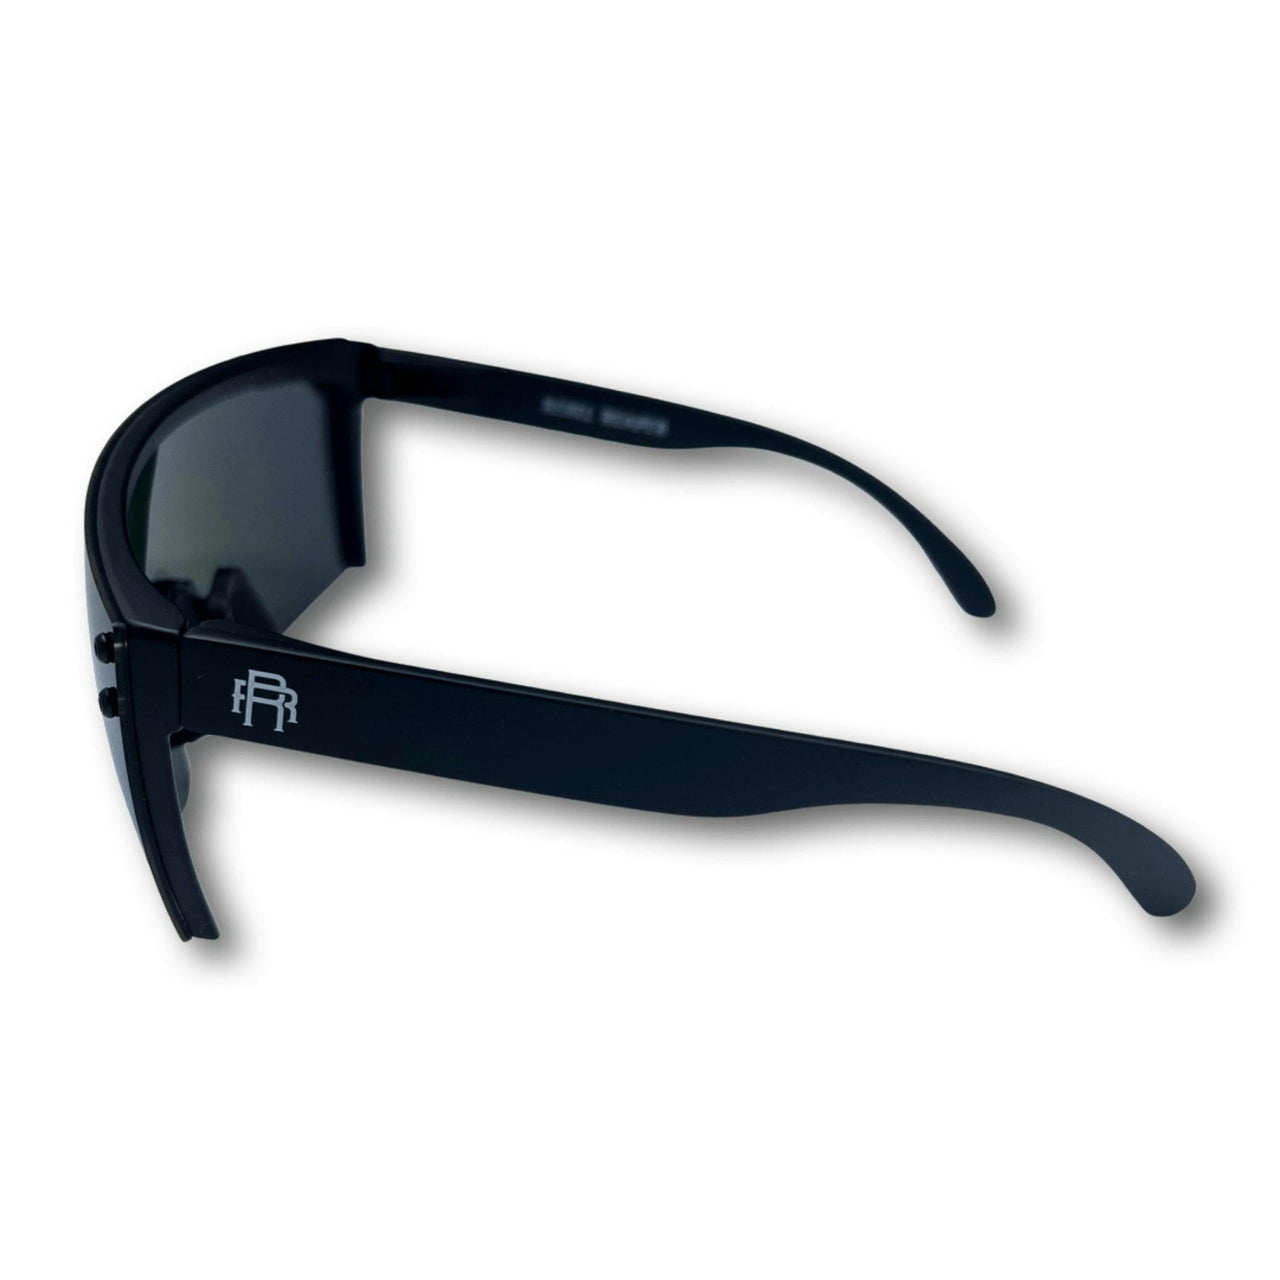 Hogans Green Mirror Polarized Lens Sunglasses